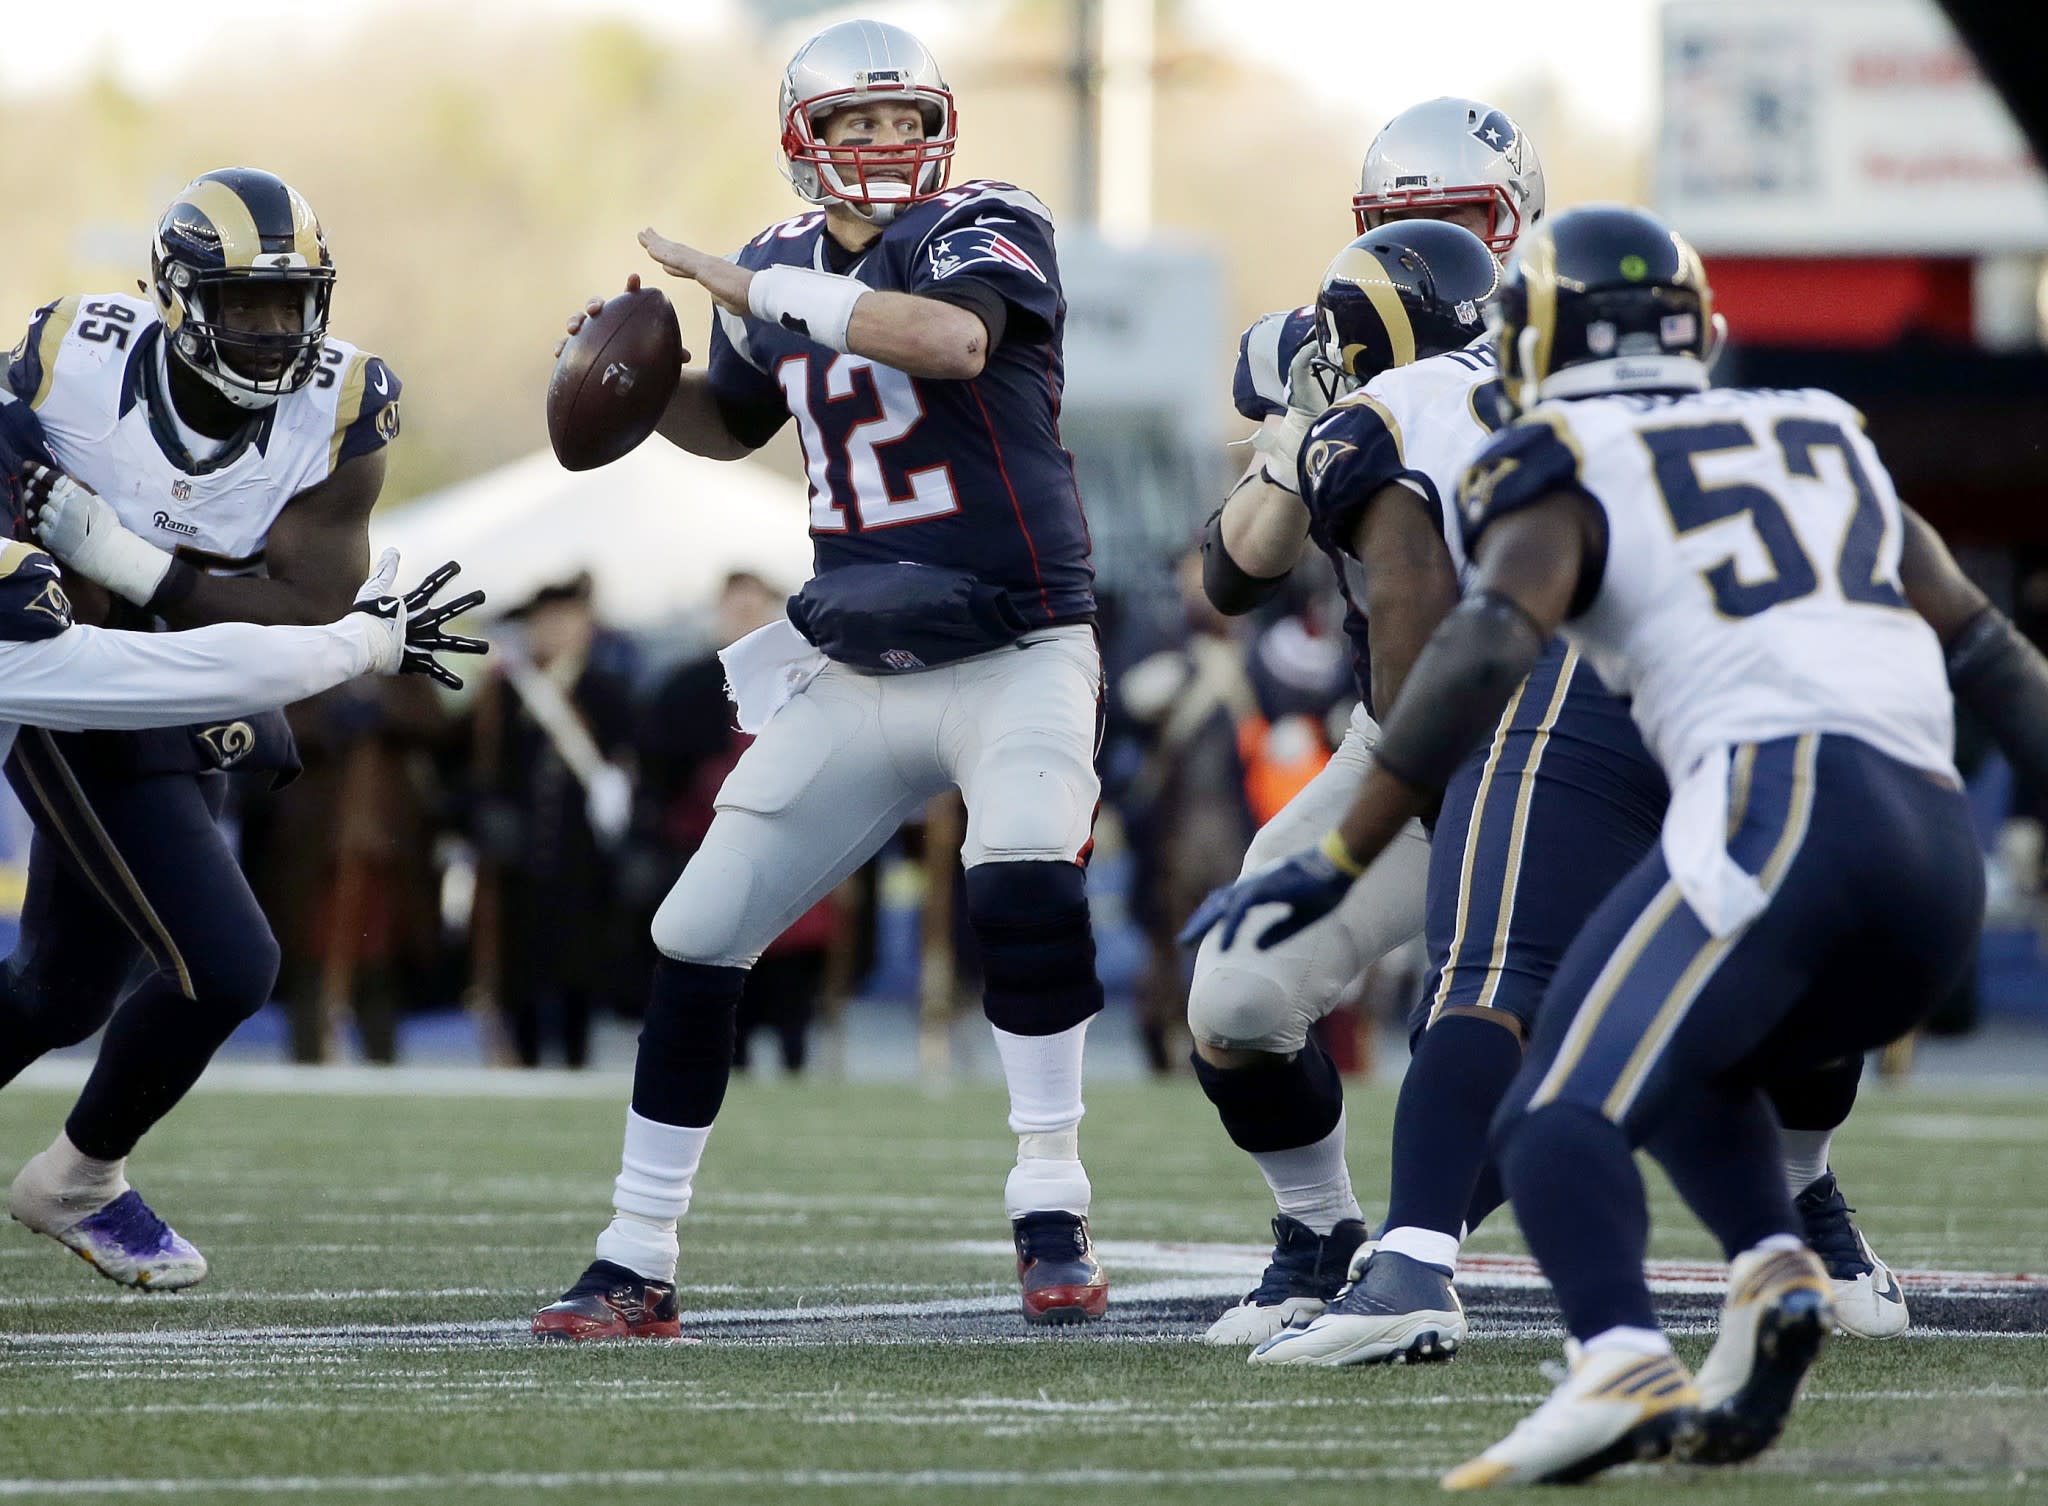 Tom Brady is now the winningest quarterback in NFL history